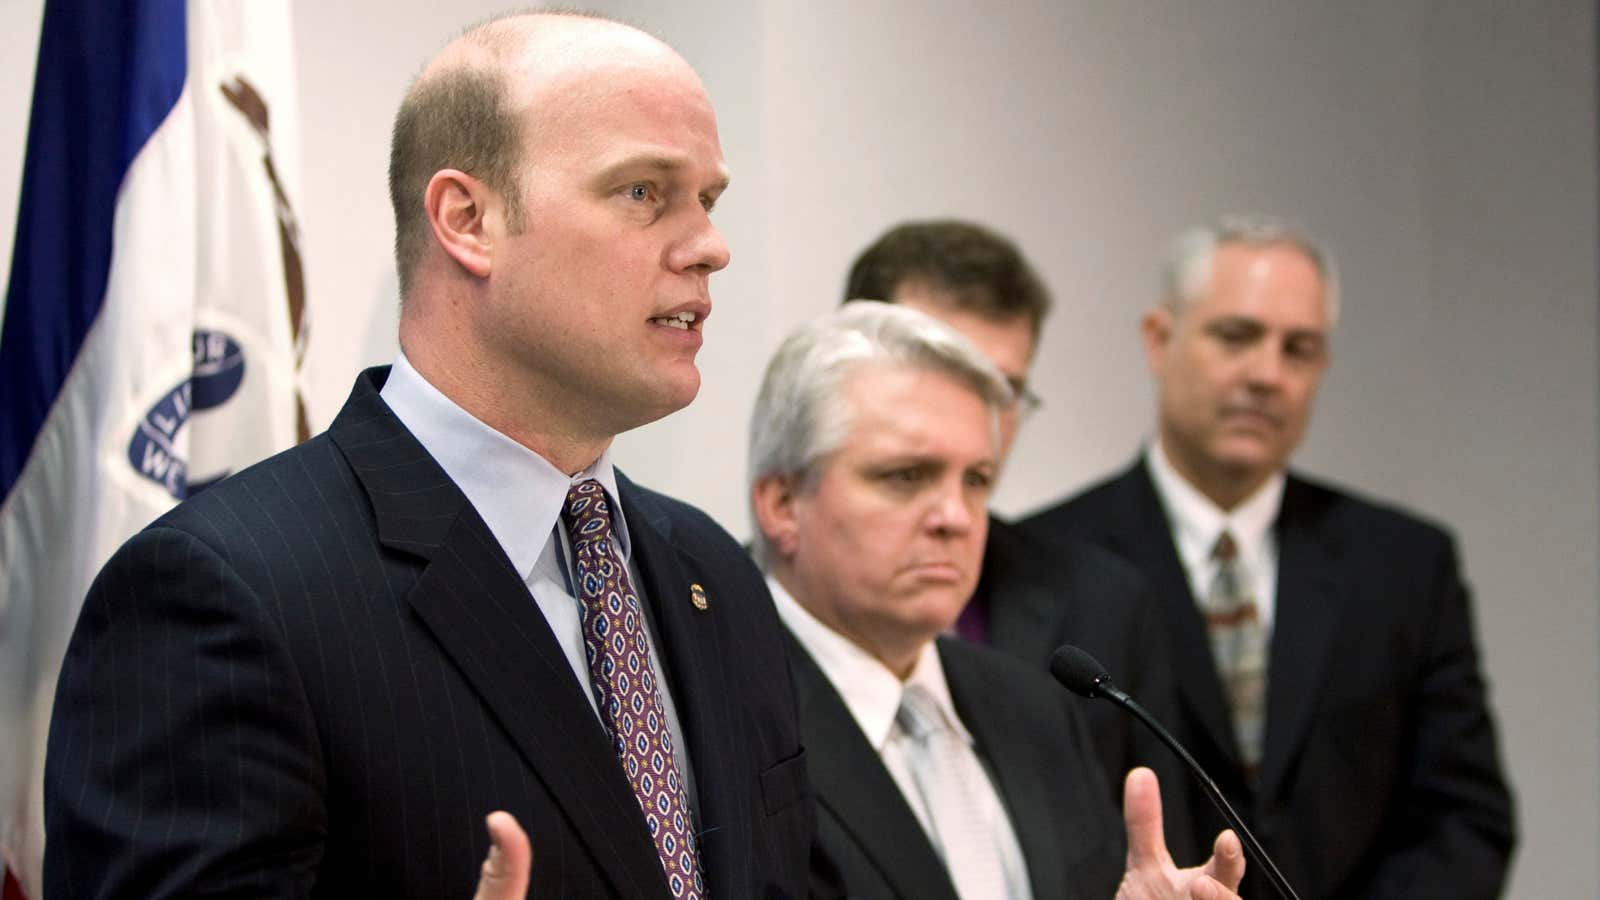 Whitaker has criticized the Mueller investigation.